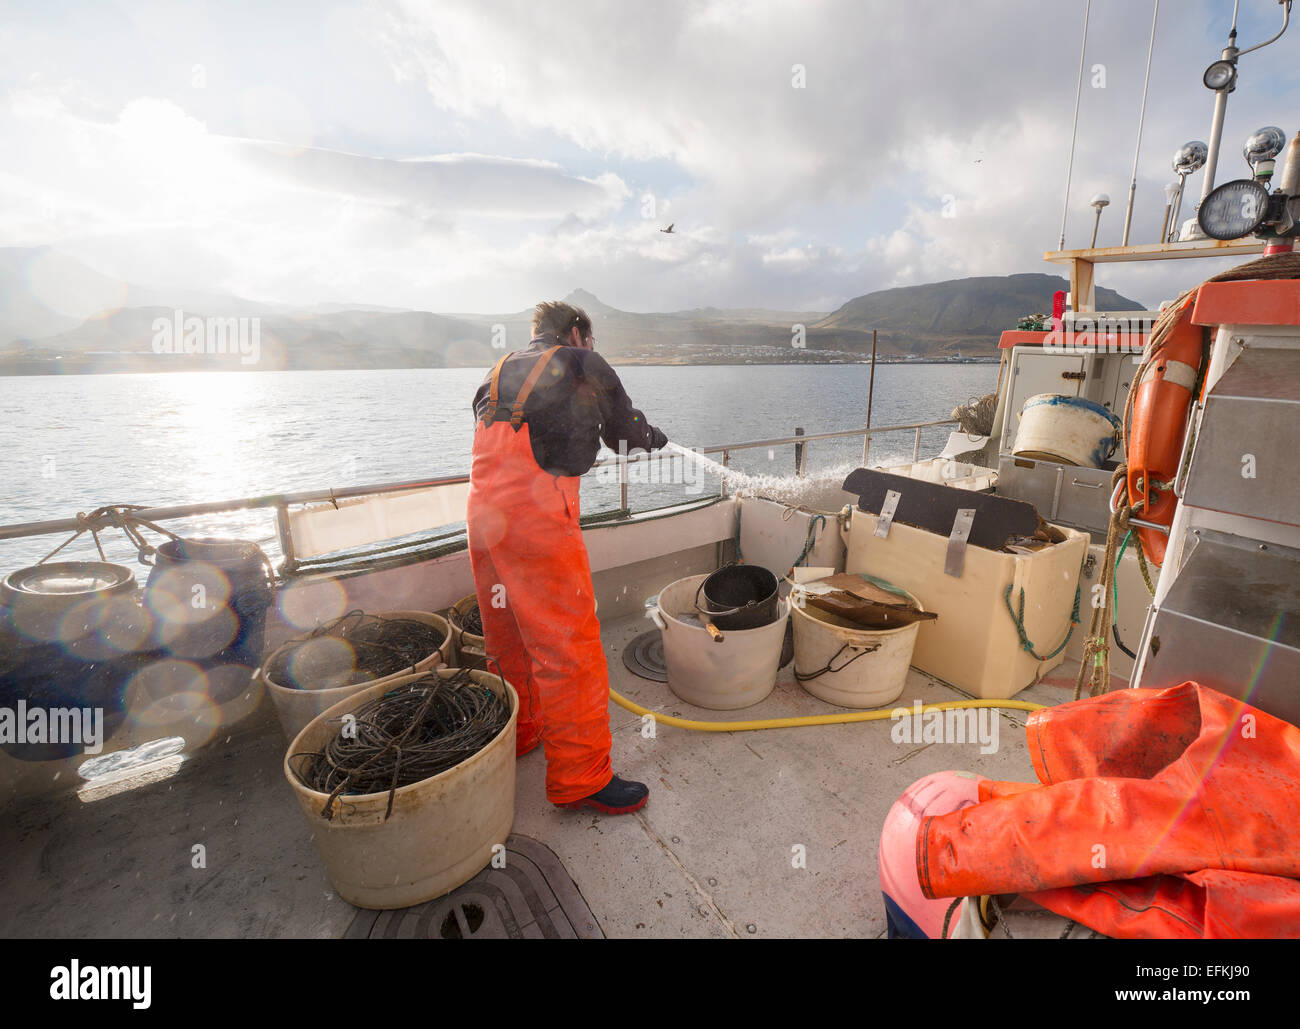 Fisherman hosing down fishing boat Stock Photo